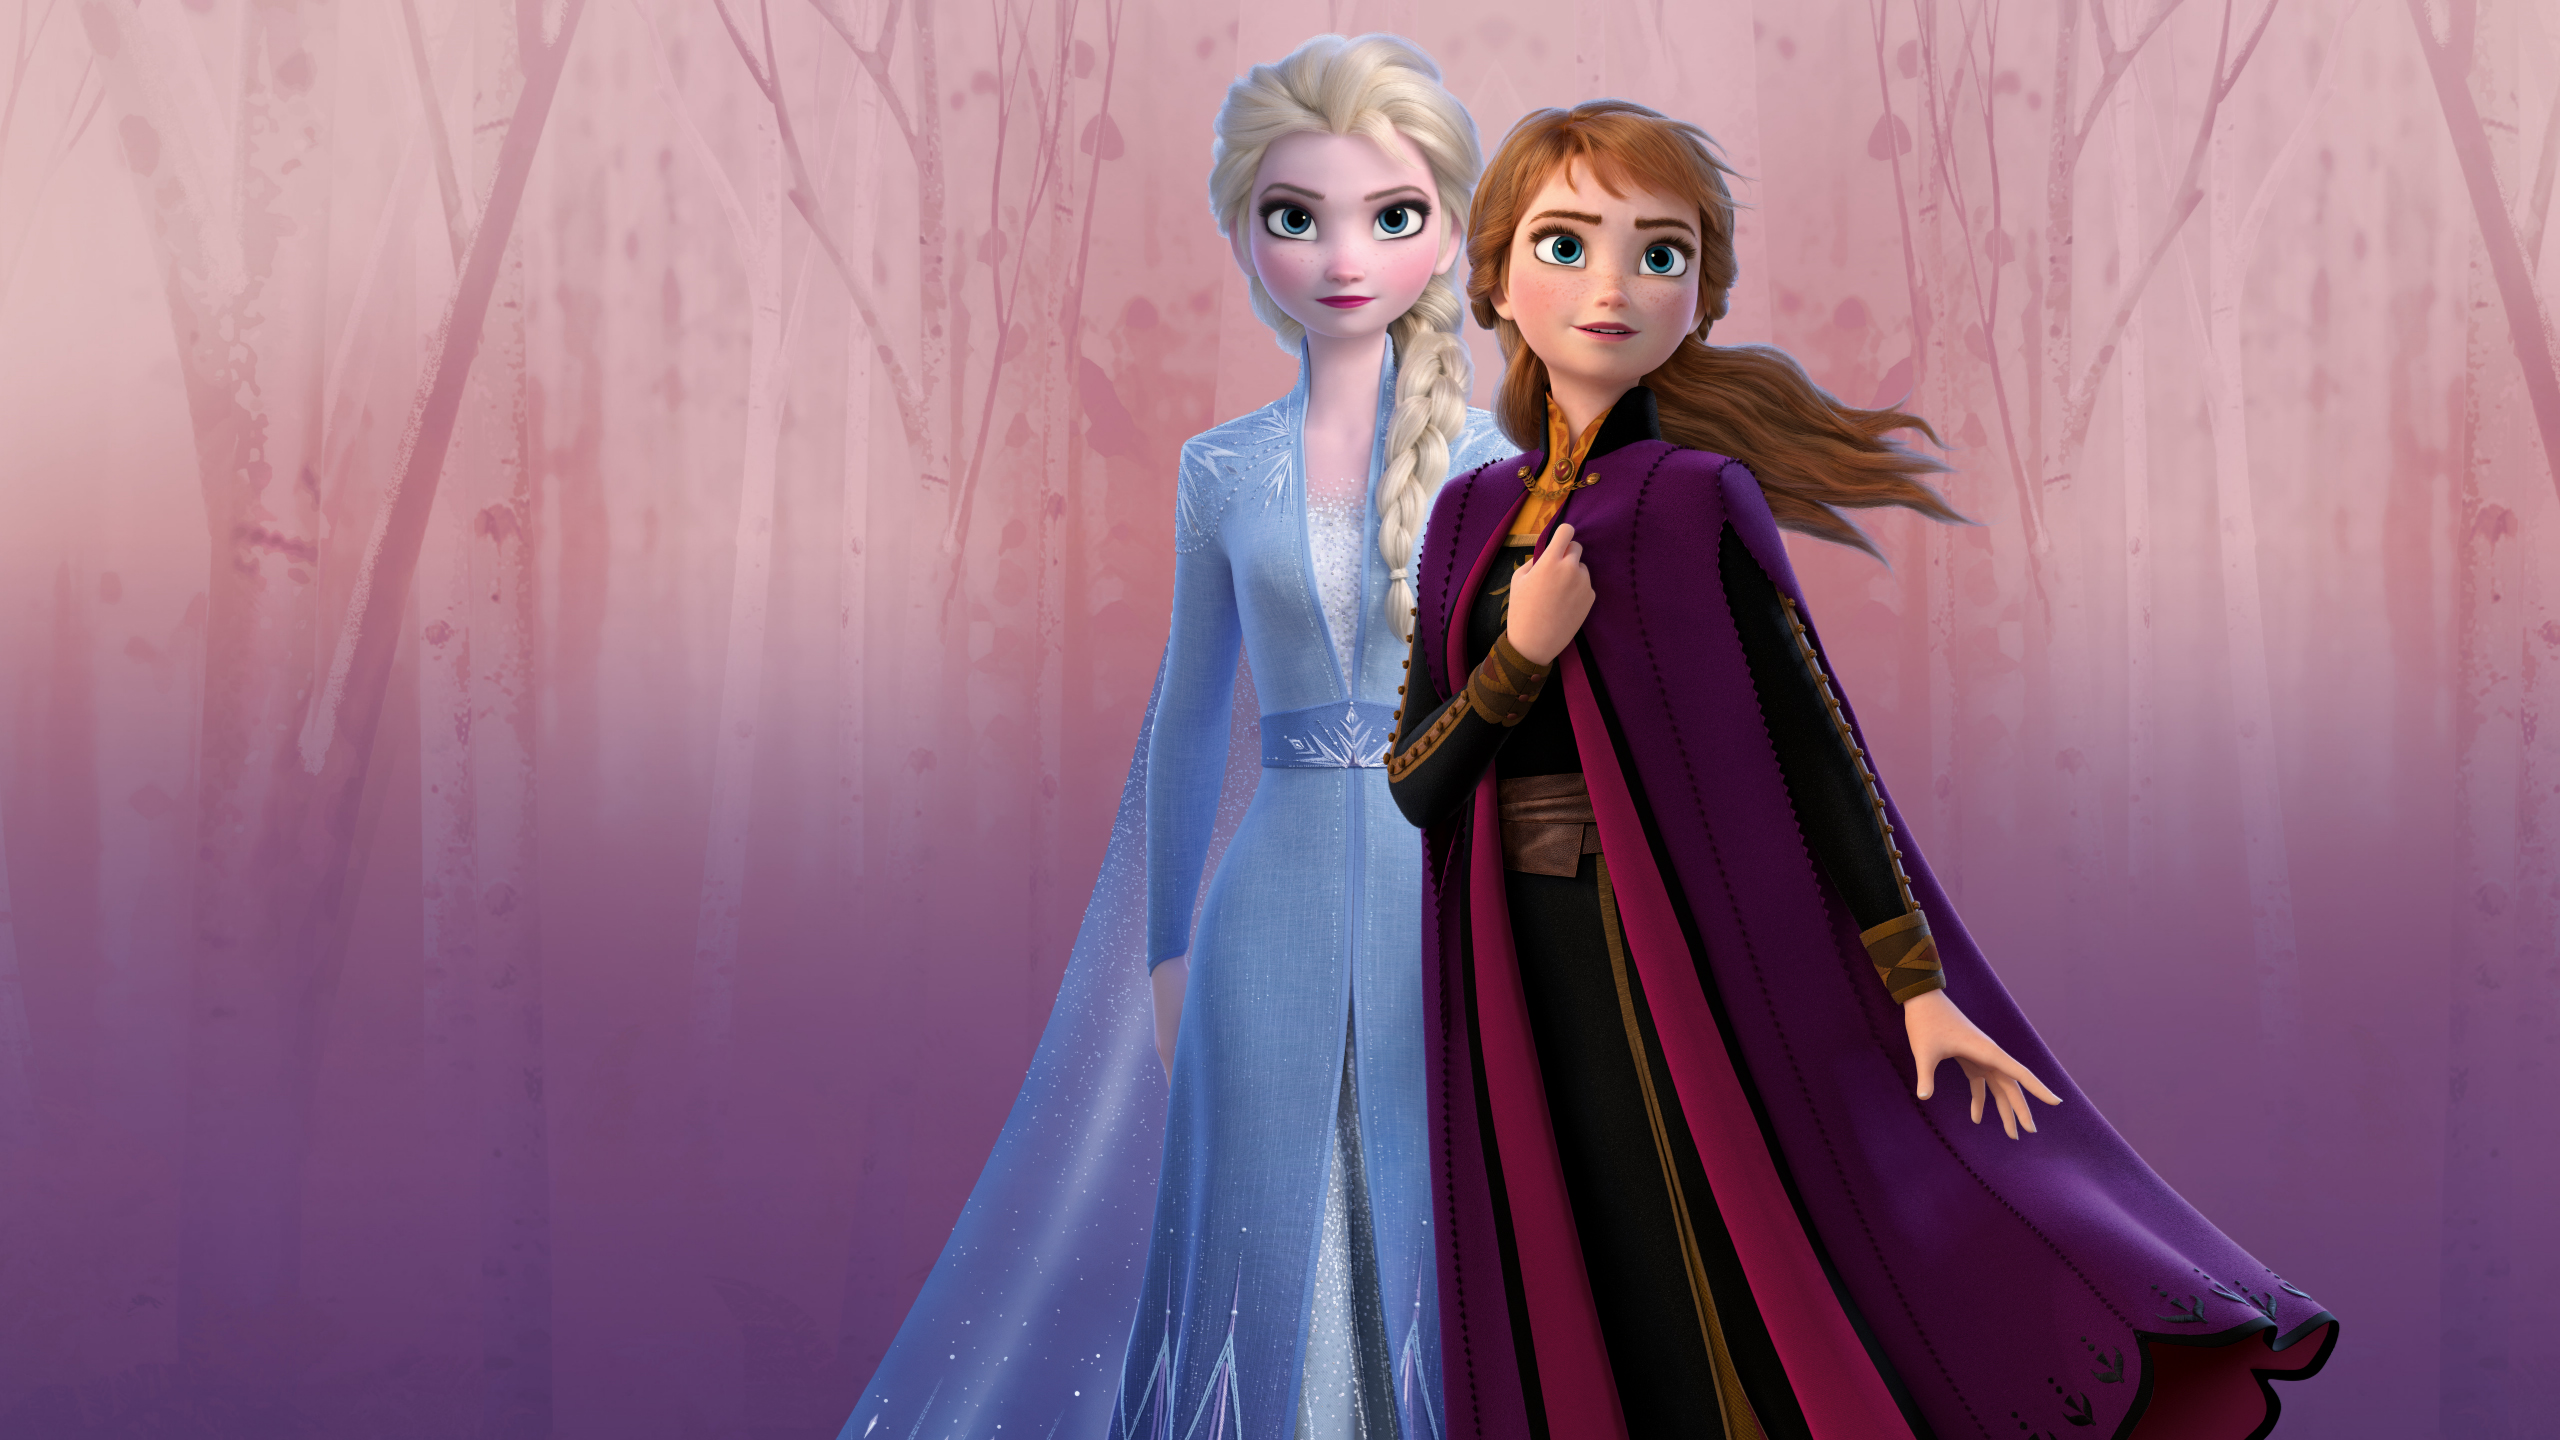 Frozen Elsa And Anna Wallpapers - Wallpaper Cave